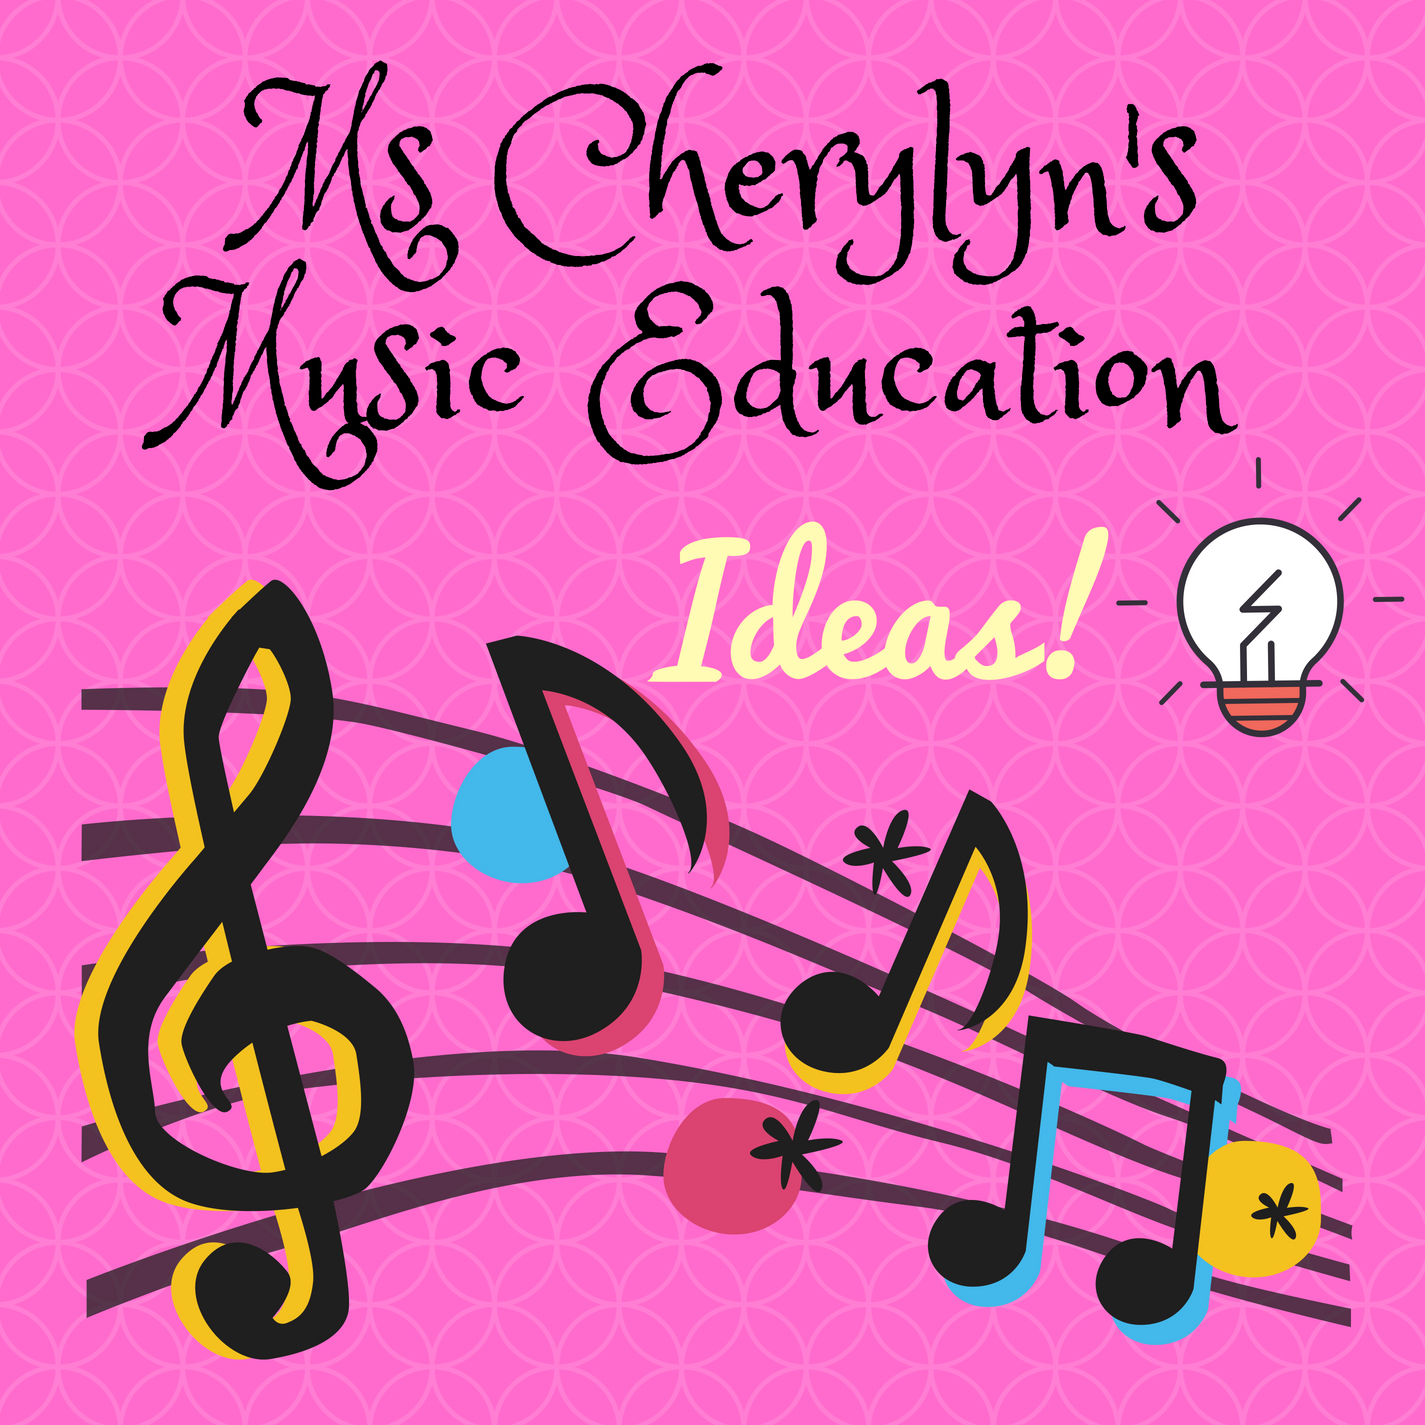 Ms Cherylyn's Music Education.jpg